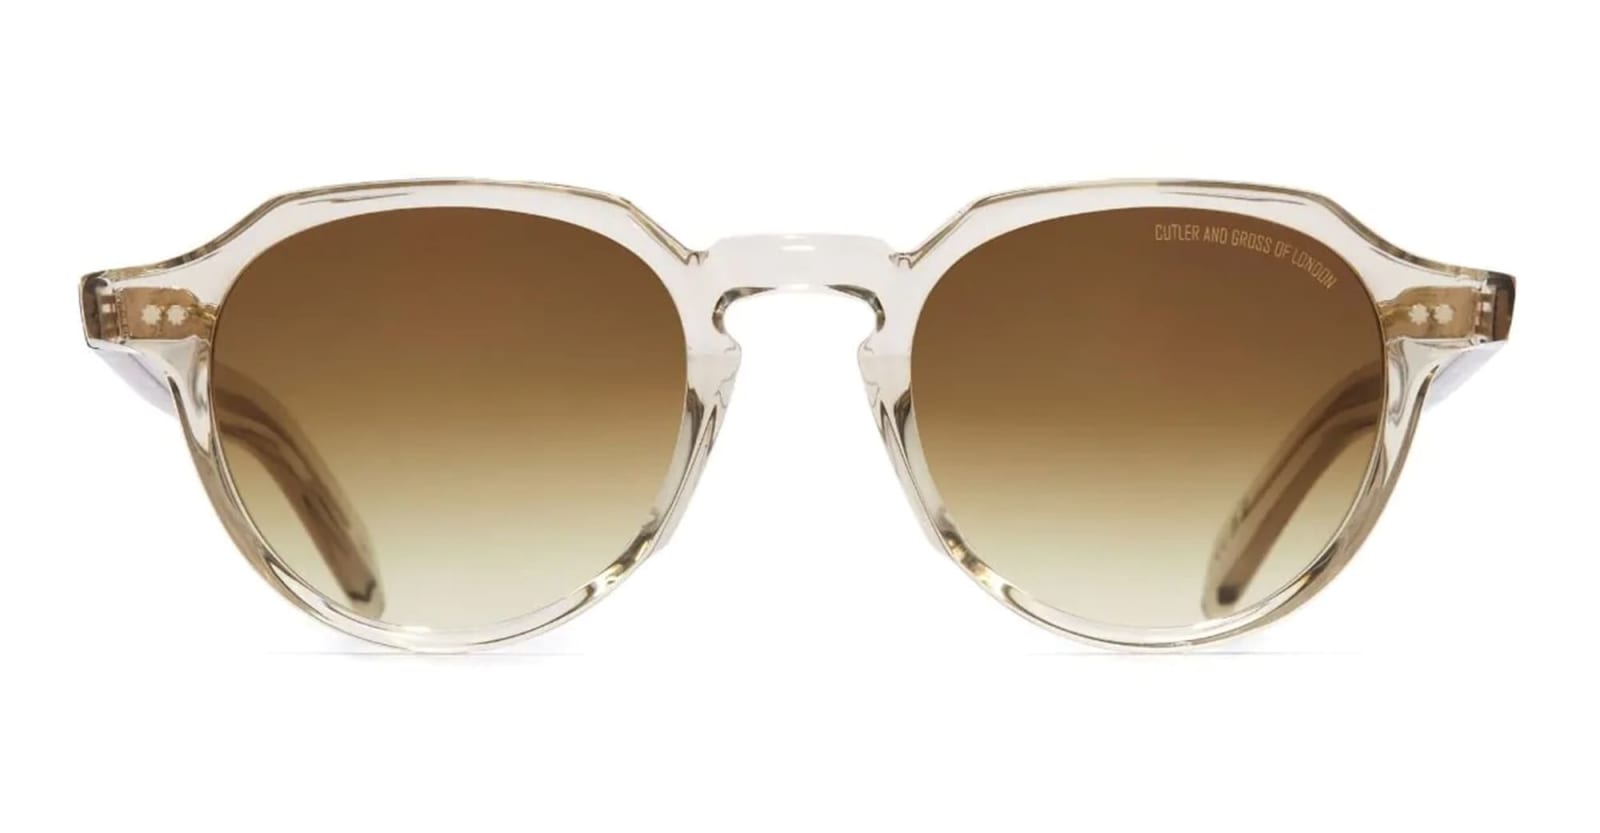 Gr06 / Sand Crystal Sunglasses